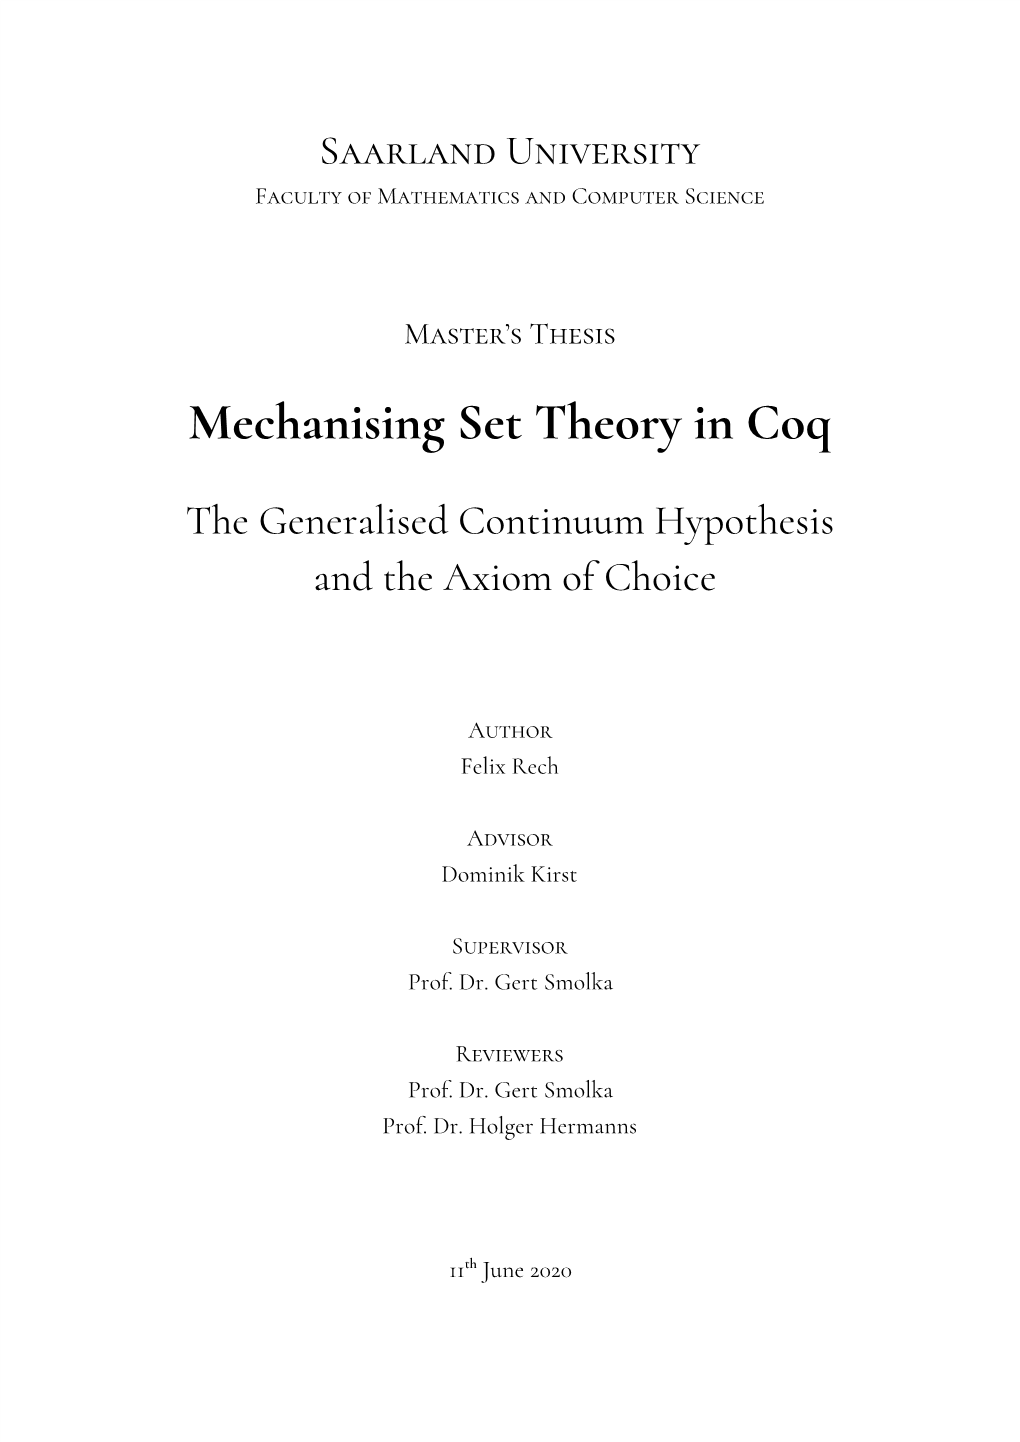 Mechanising Set Theory in Coq